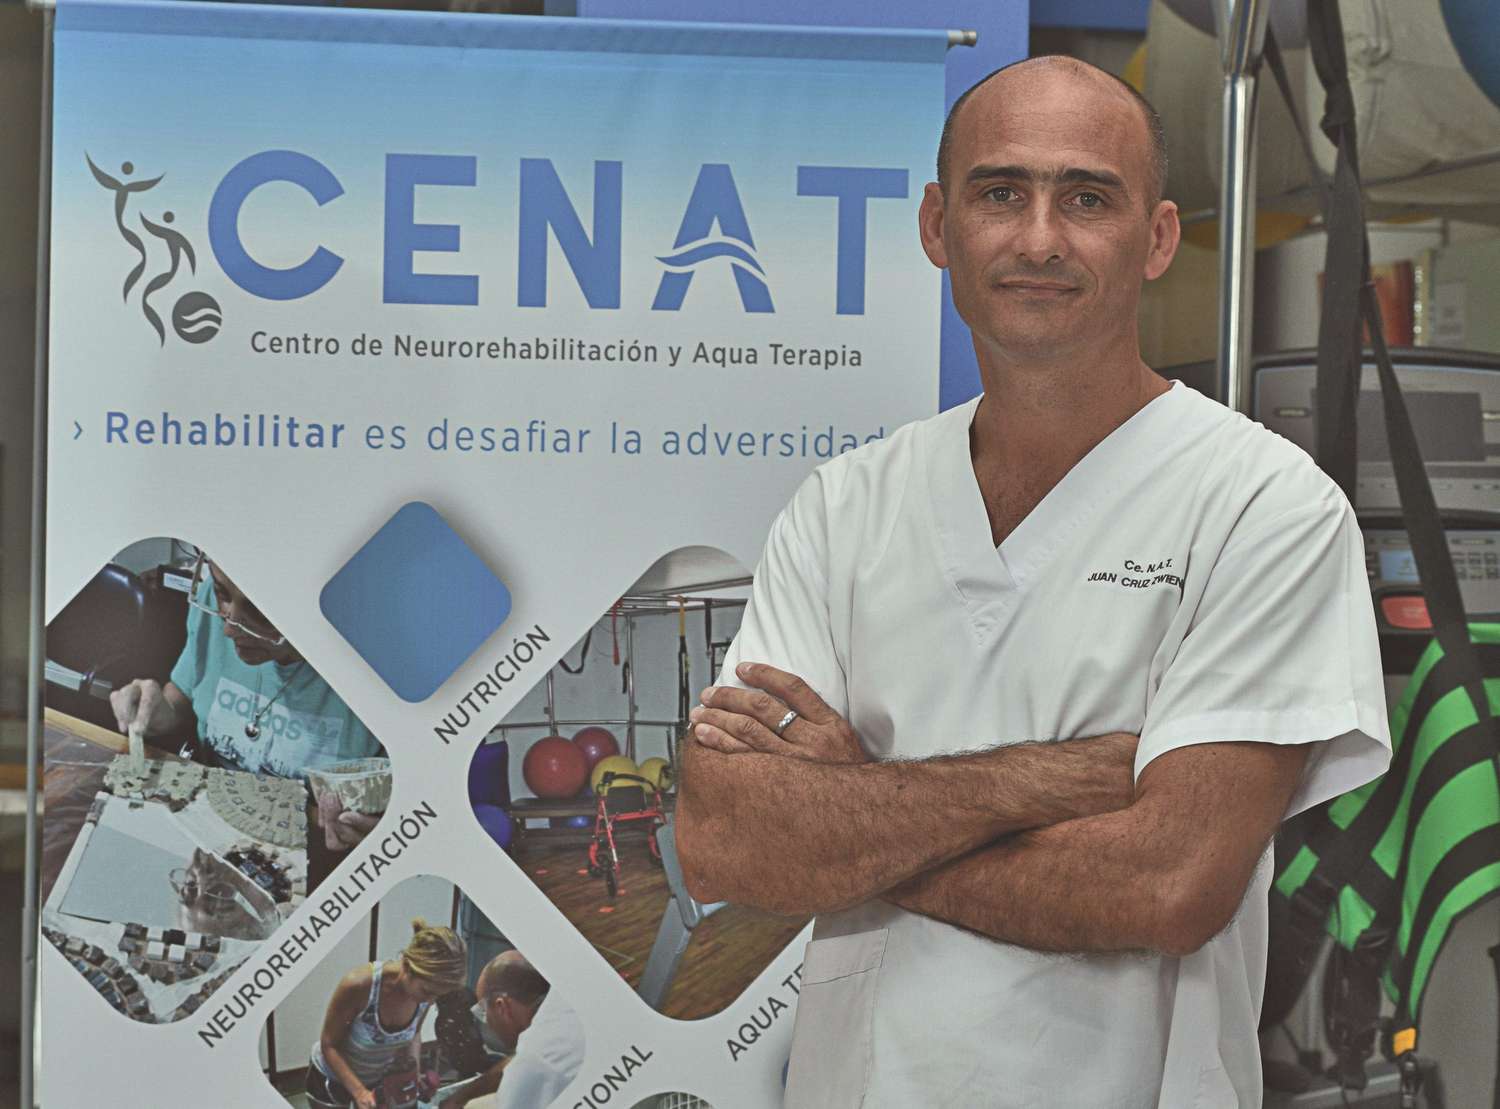 Juan Cruz Zwiener: “Rehabilitar es desafiar la adversidad”